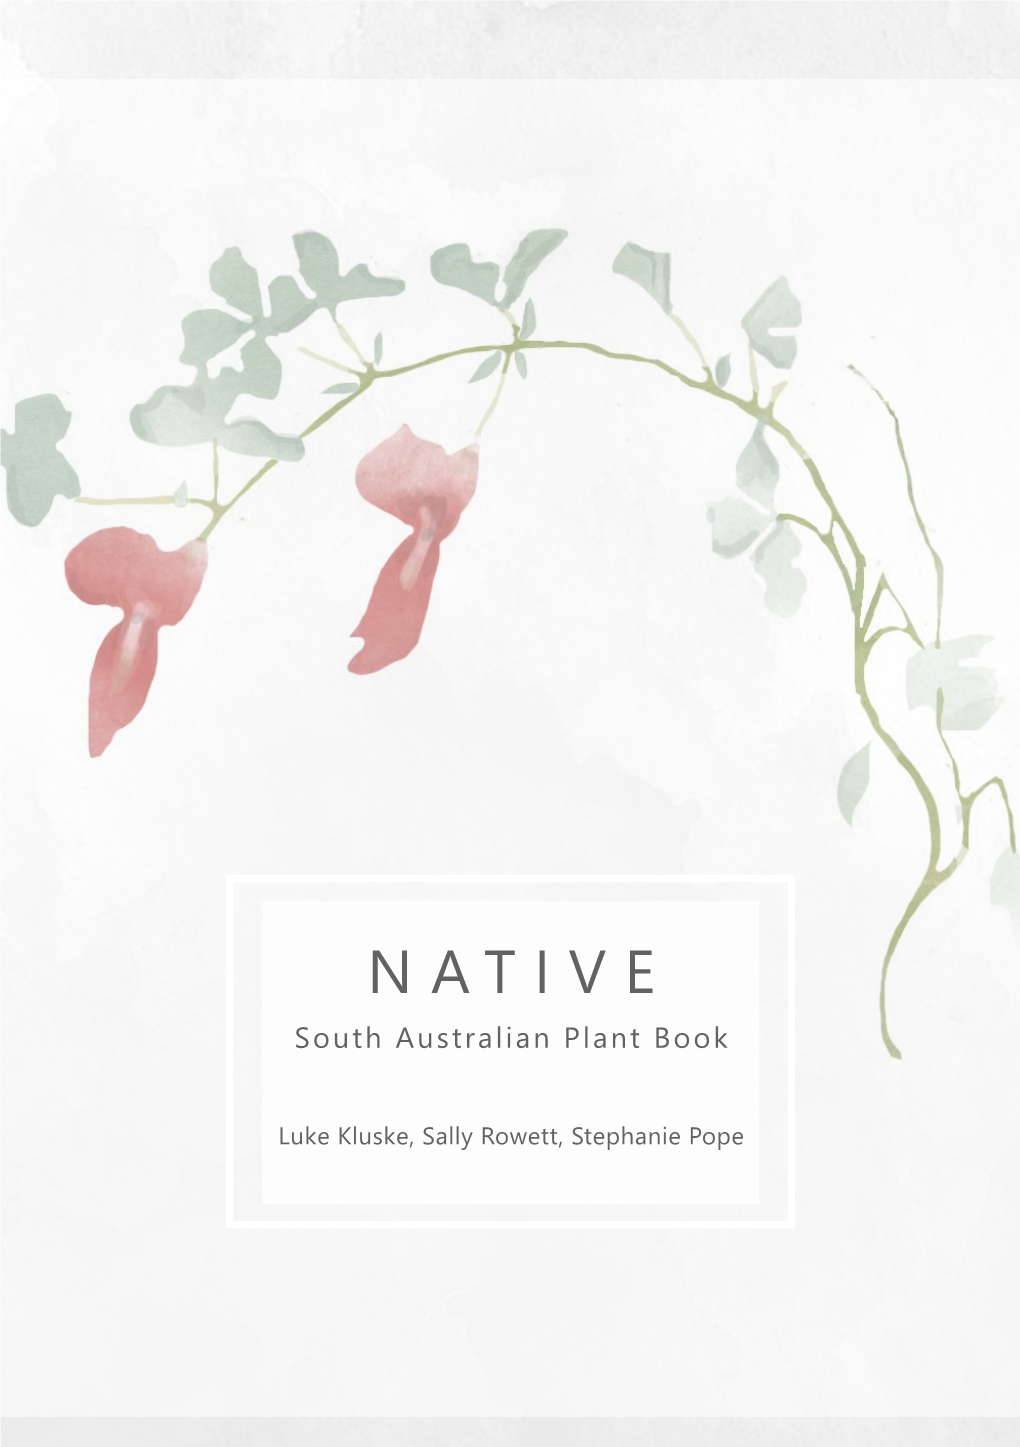 NATIVE South Australian Plant Book